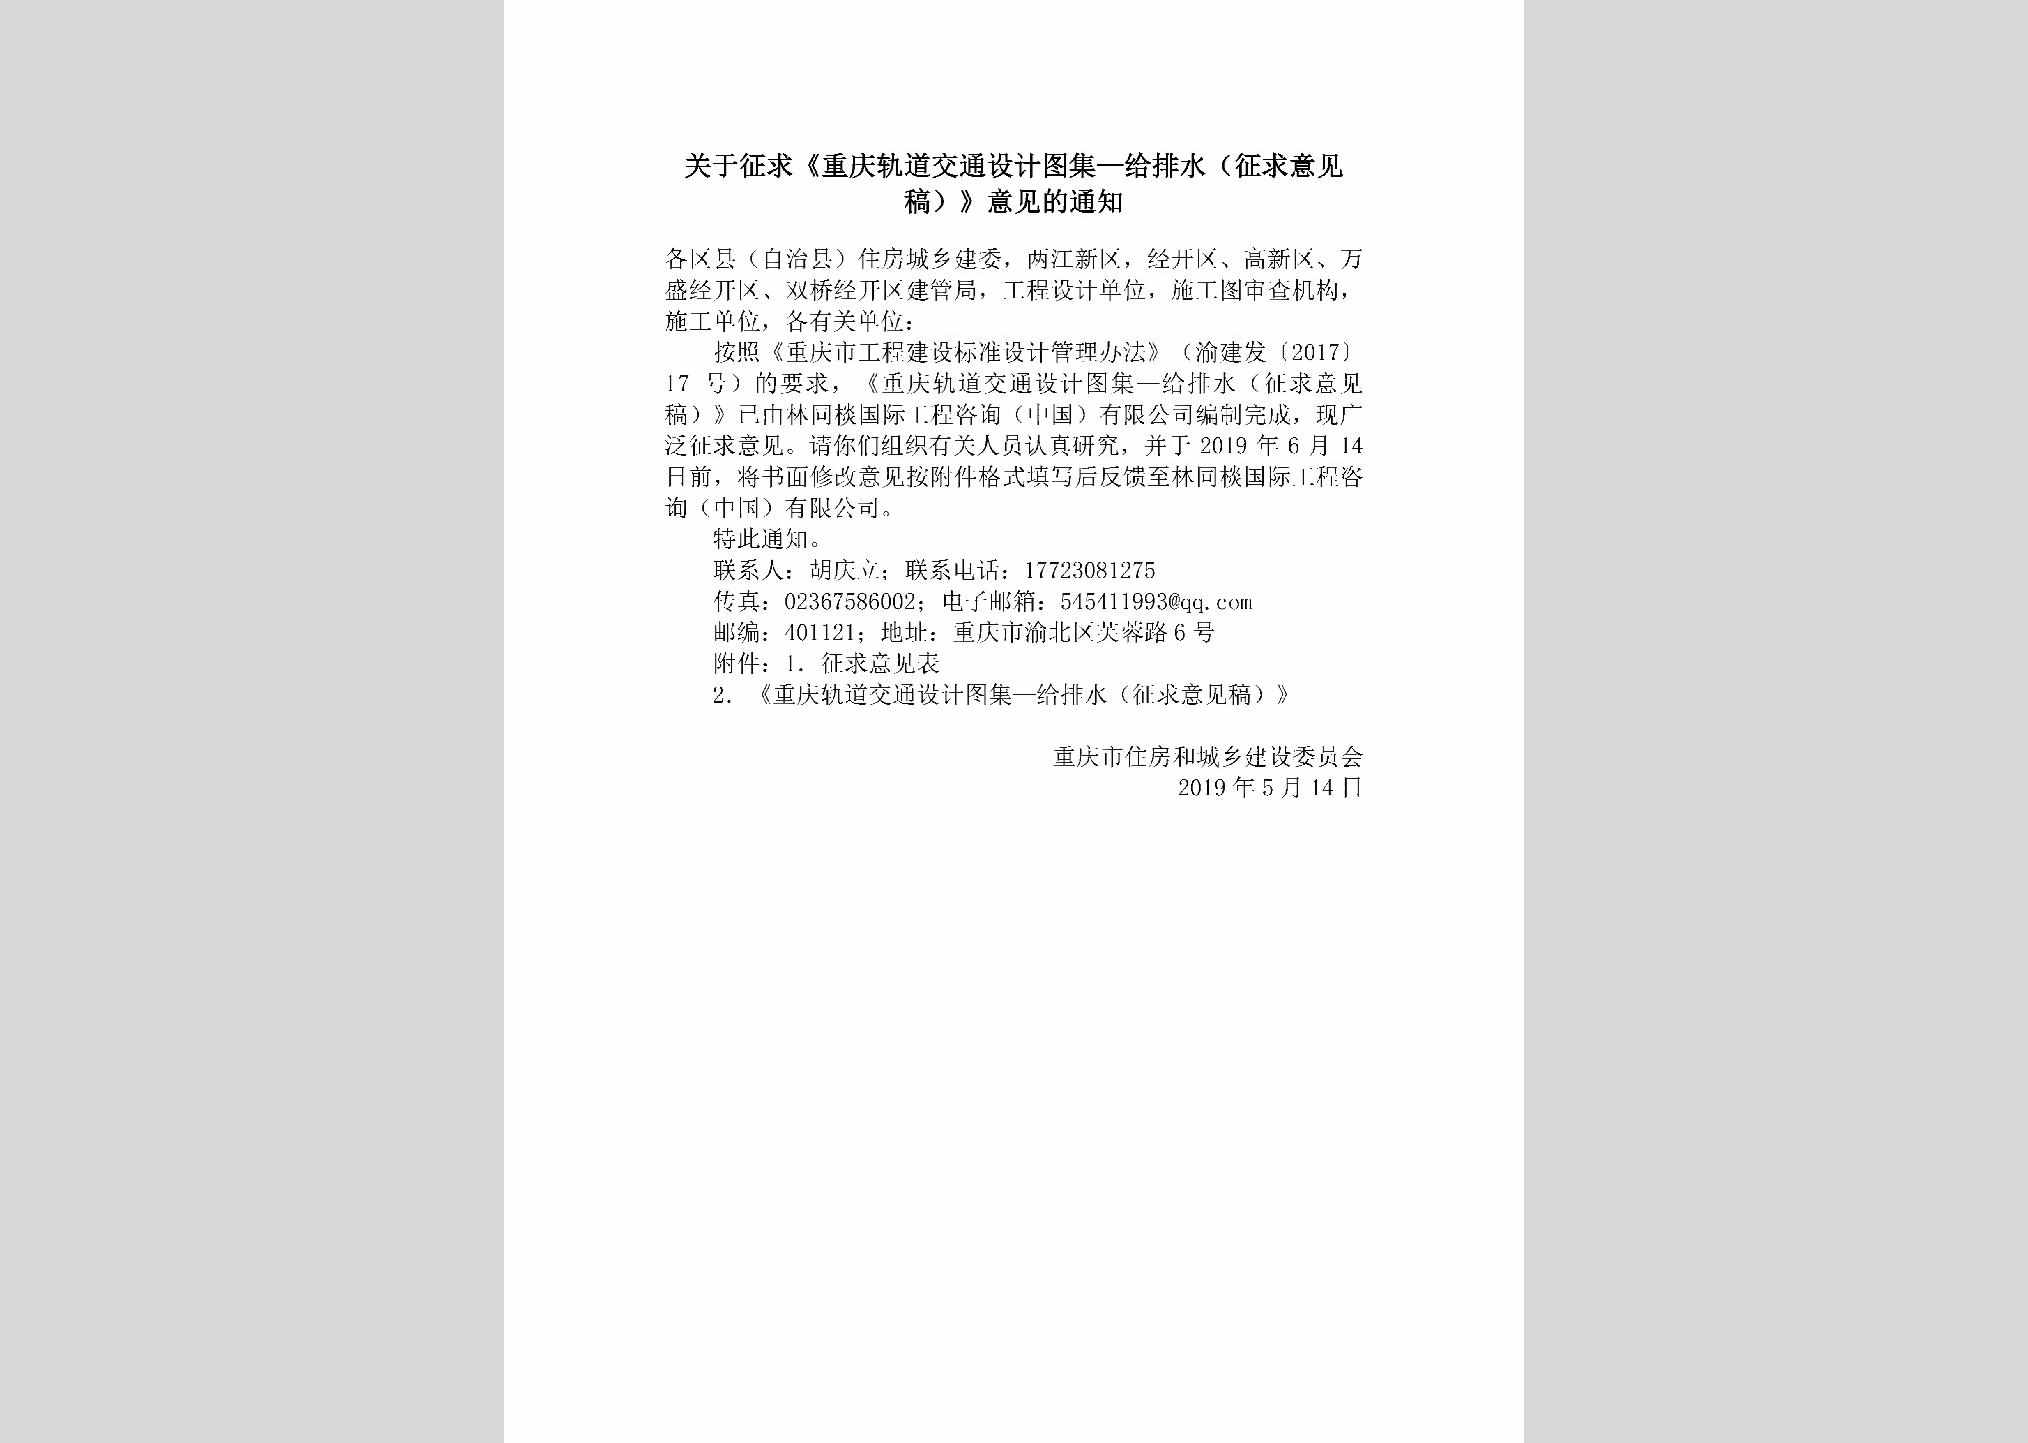 CQ-GDJTSJTJ-2019：关于征求《重庆轨道交通设计图集—给排水（征求意见稿）》意见的通知